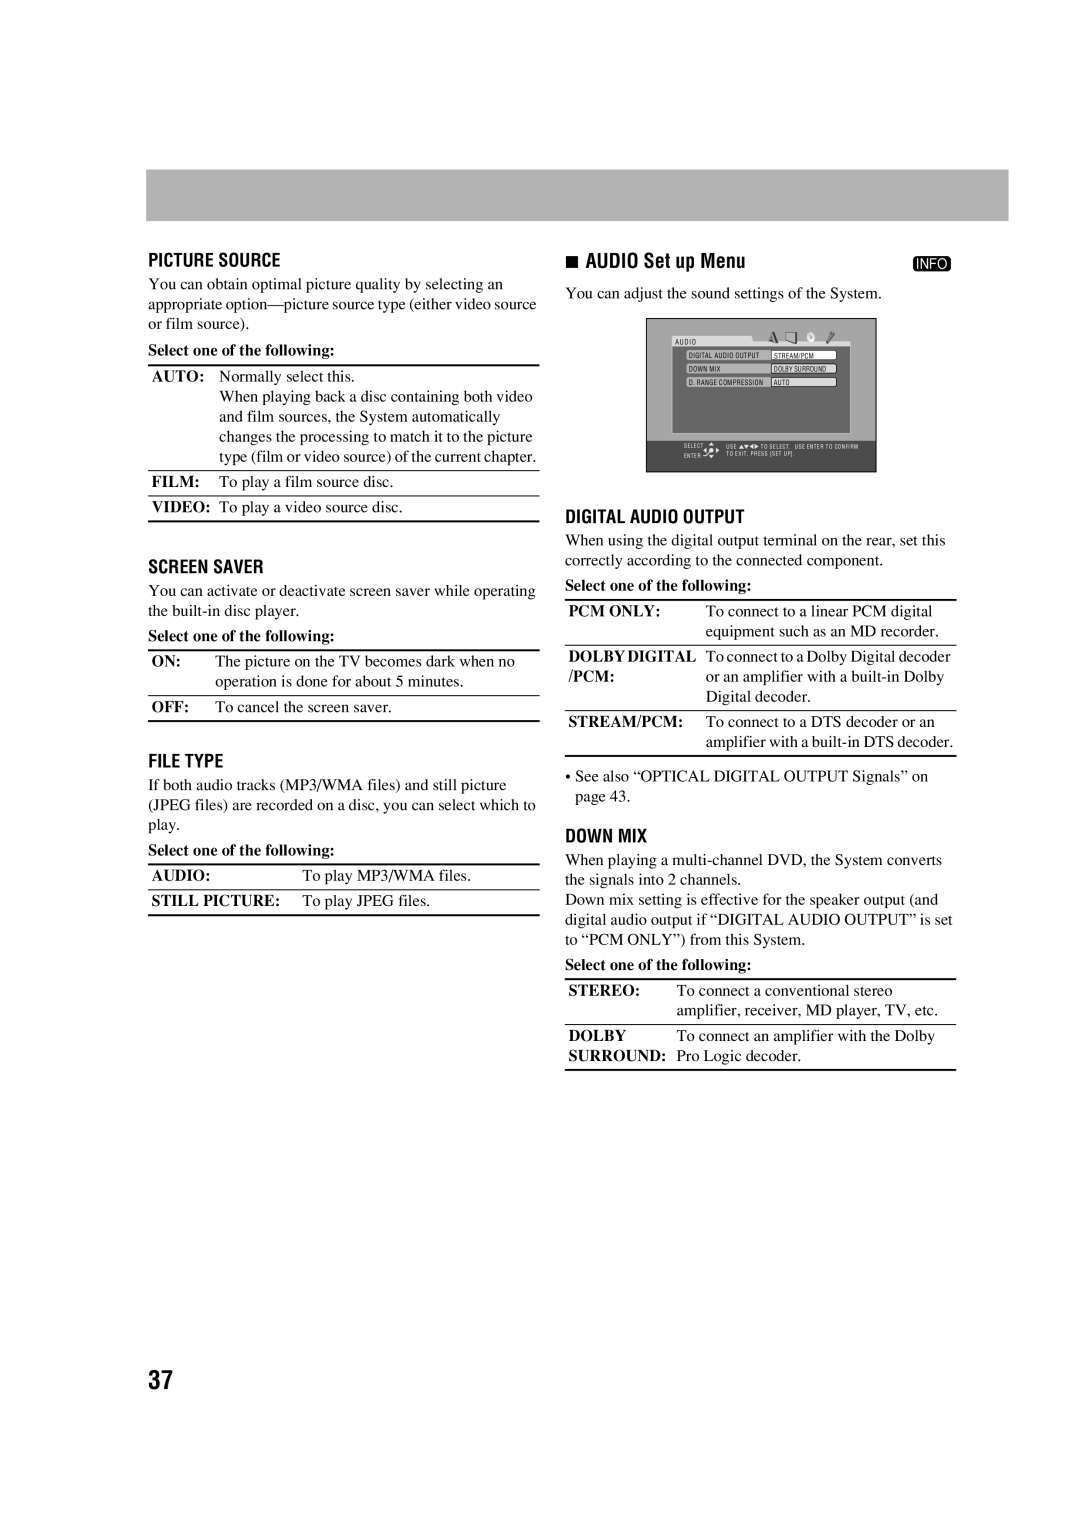 JVC HX-D77 manual AUDIO Set up Menu, Picture Source, Screen Saver, File Type, Digital Audio Output, Down Mix 